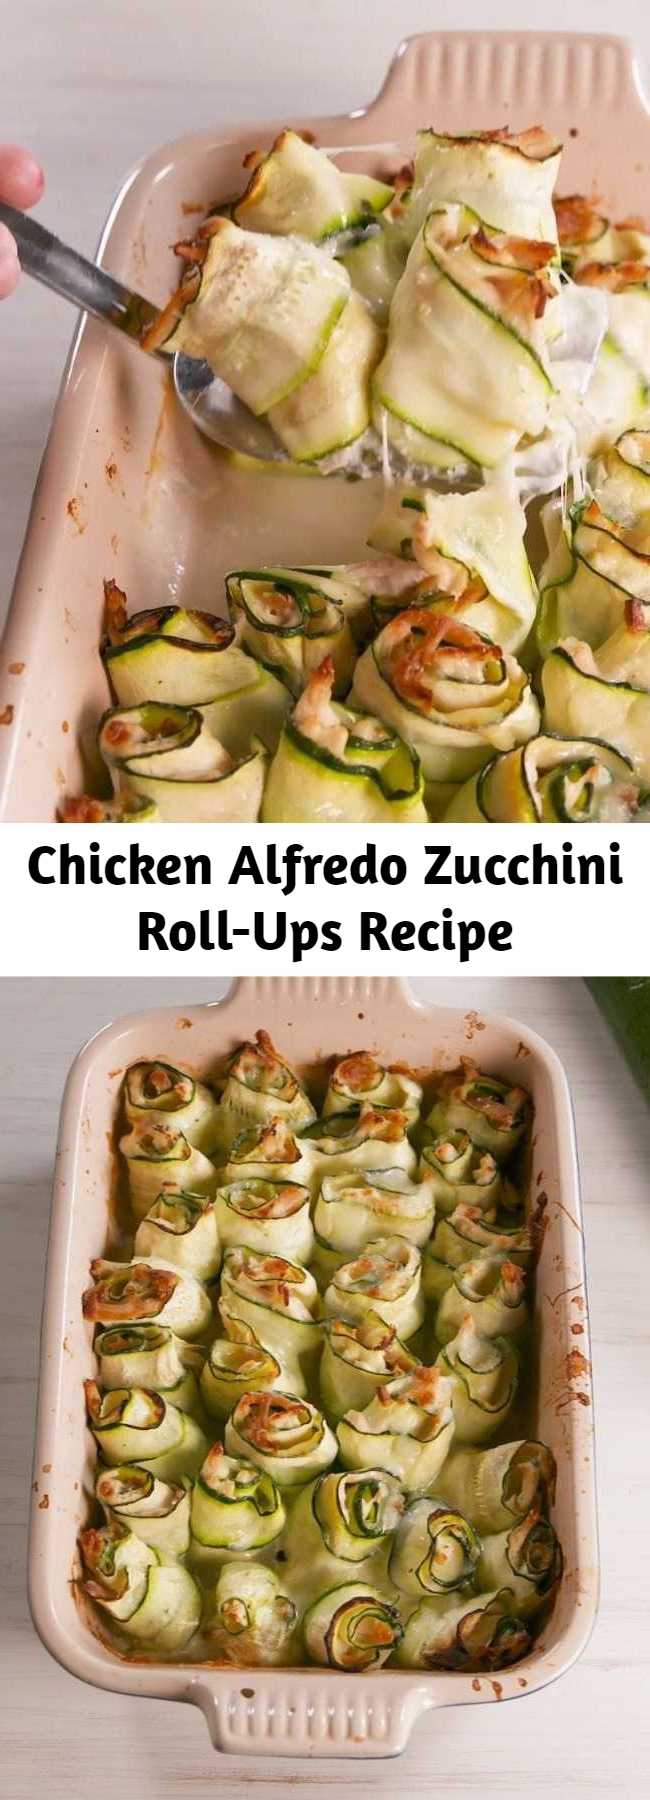 Chicken Alfredo Zucchini Roll-Ups Recipe - Bite-size everything! #food #easyrecipe #dinner #familydinner #healthyeating